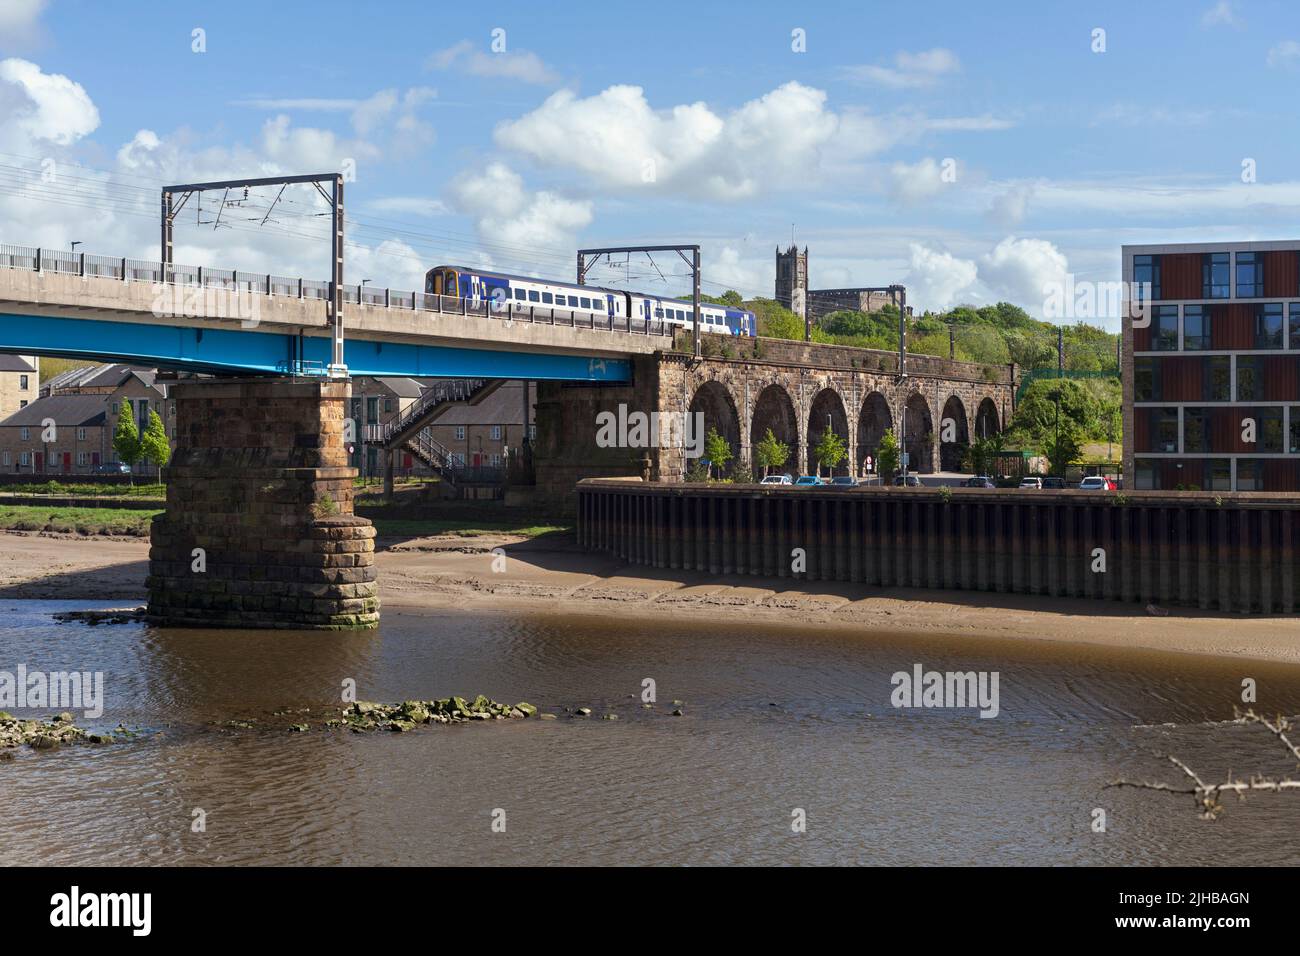 Northern rail class 158 sprinter train crossing  Carlisle Bridge (Lancaster, river Lune) Stock Photo